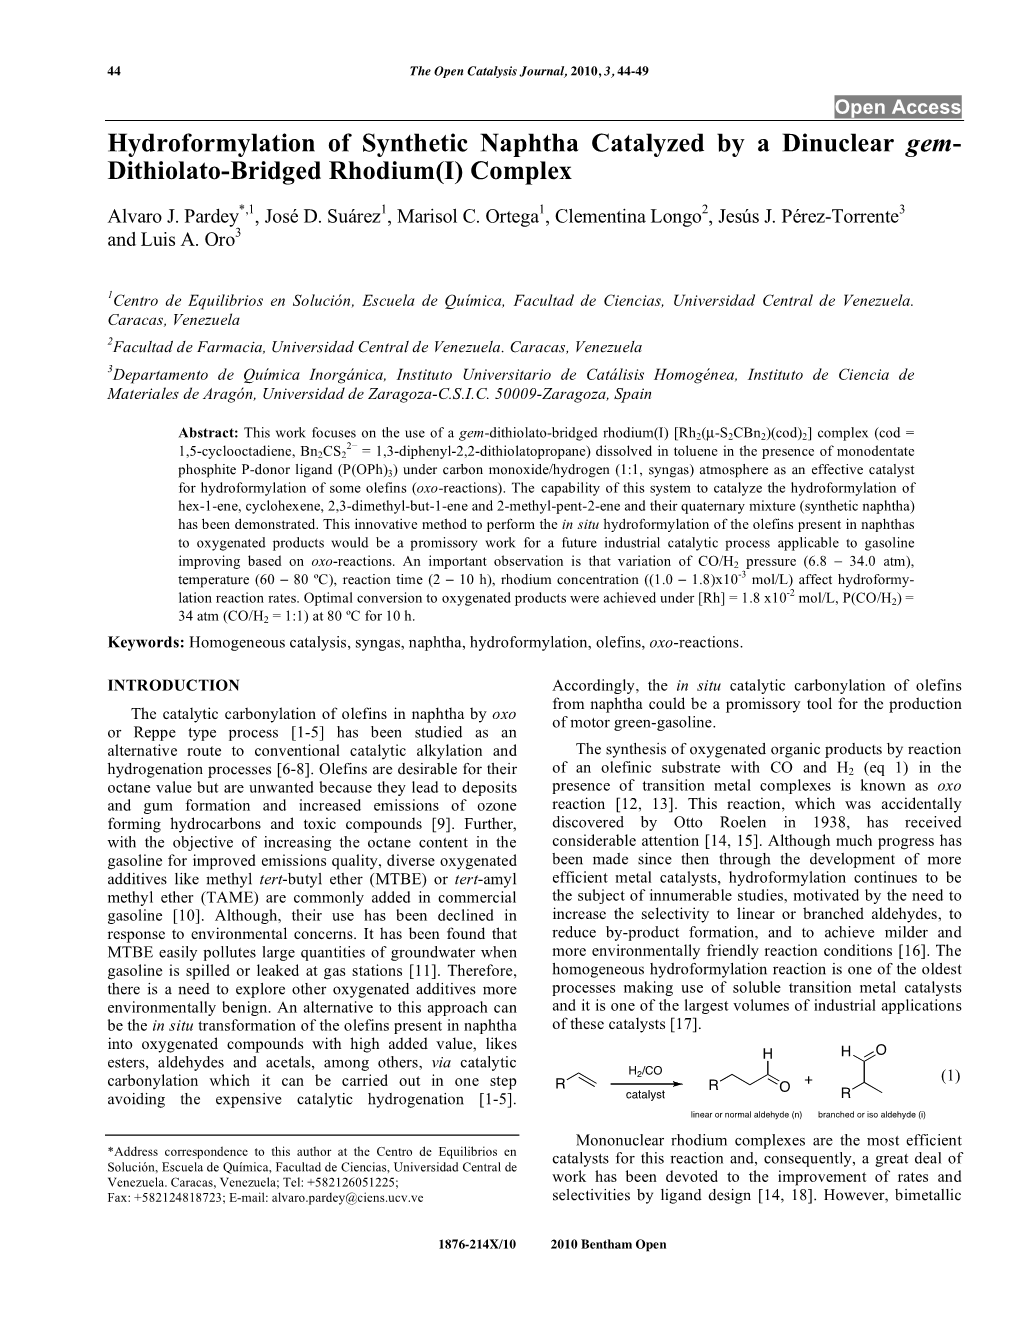 Hydroformylation of Synthetic Naphtha Catalyzed by a Dinuclear Gem- Dithiolato-Bridged Rhodium(I) Complex